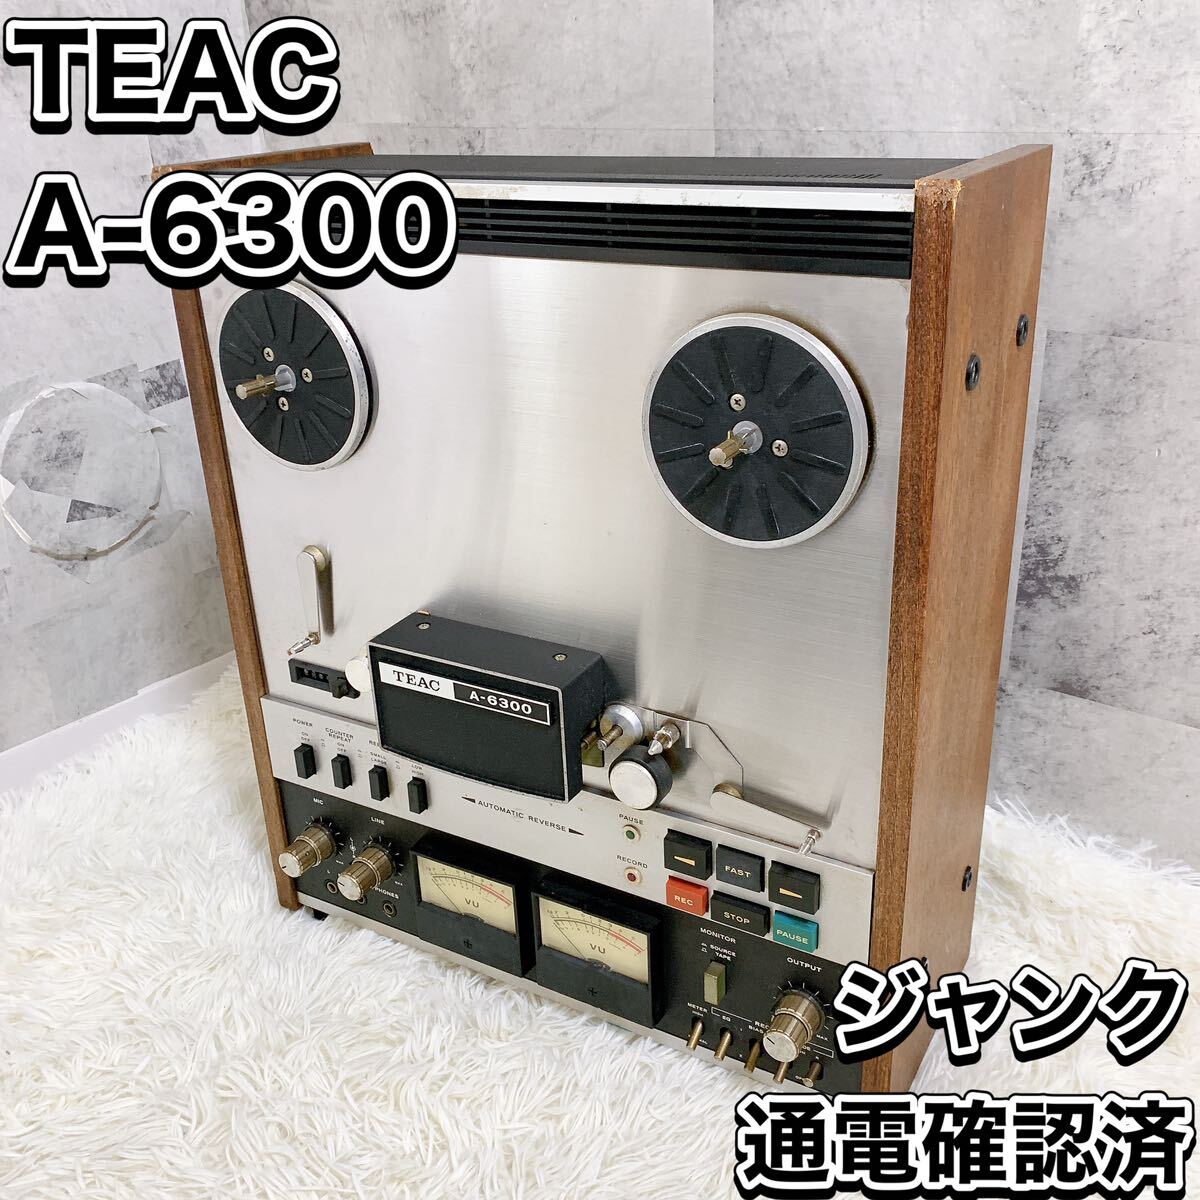 TEAC Teac A-6300 open reel deck electrification has confirmed audio equipment Junk stereo 